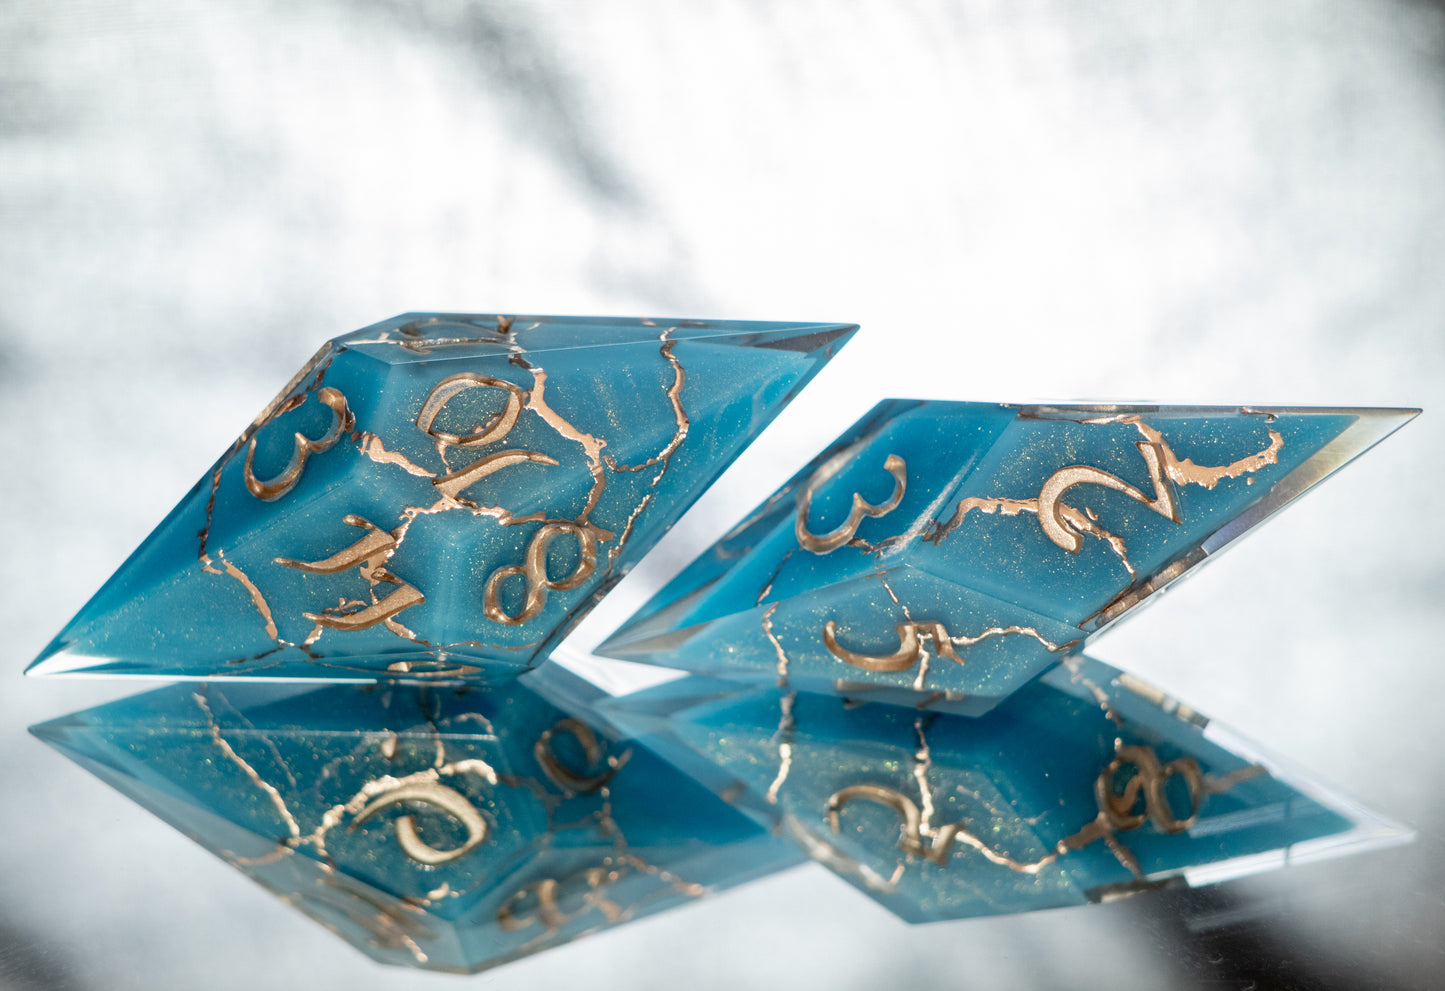 Turquoise Kintsugi - 7 Piece Handmade Resin Dice